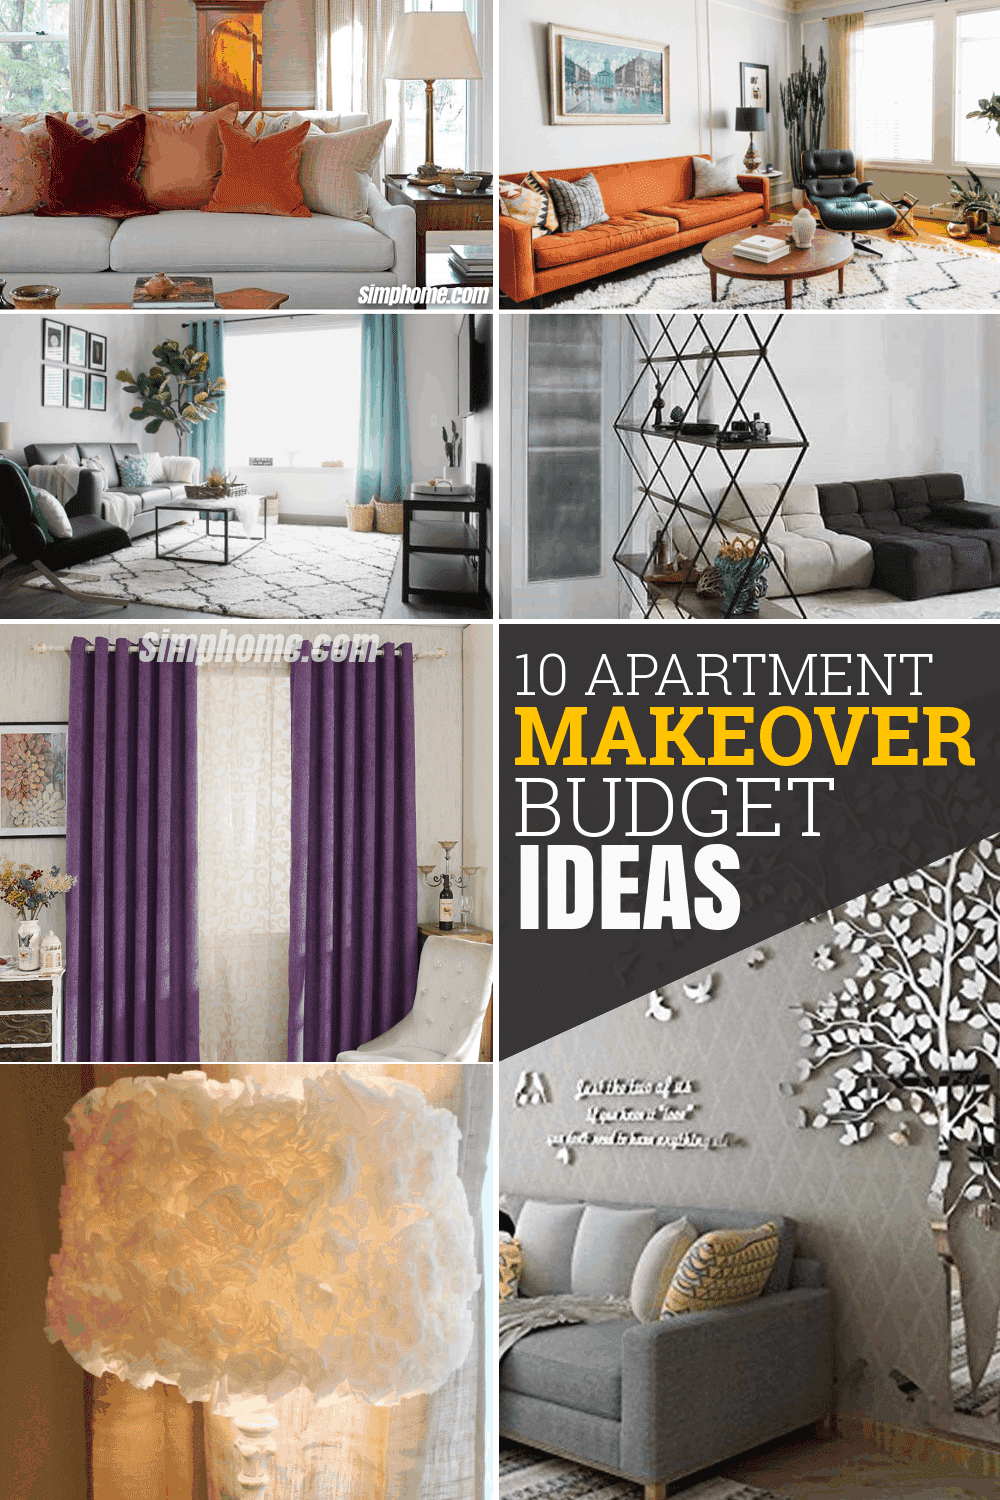 10 Apartment Makeover Budget Ideas Simphome.com Featured Pinterest Image